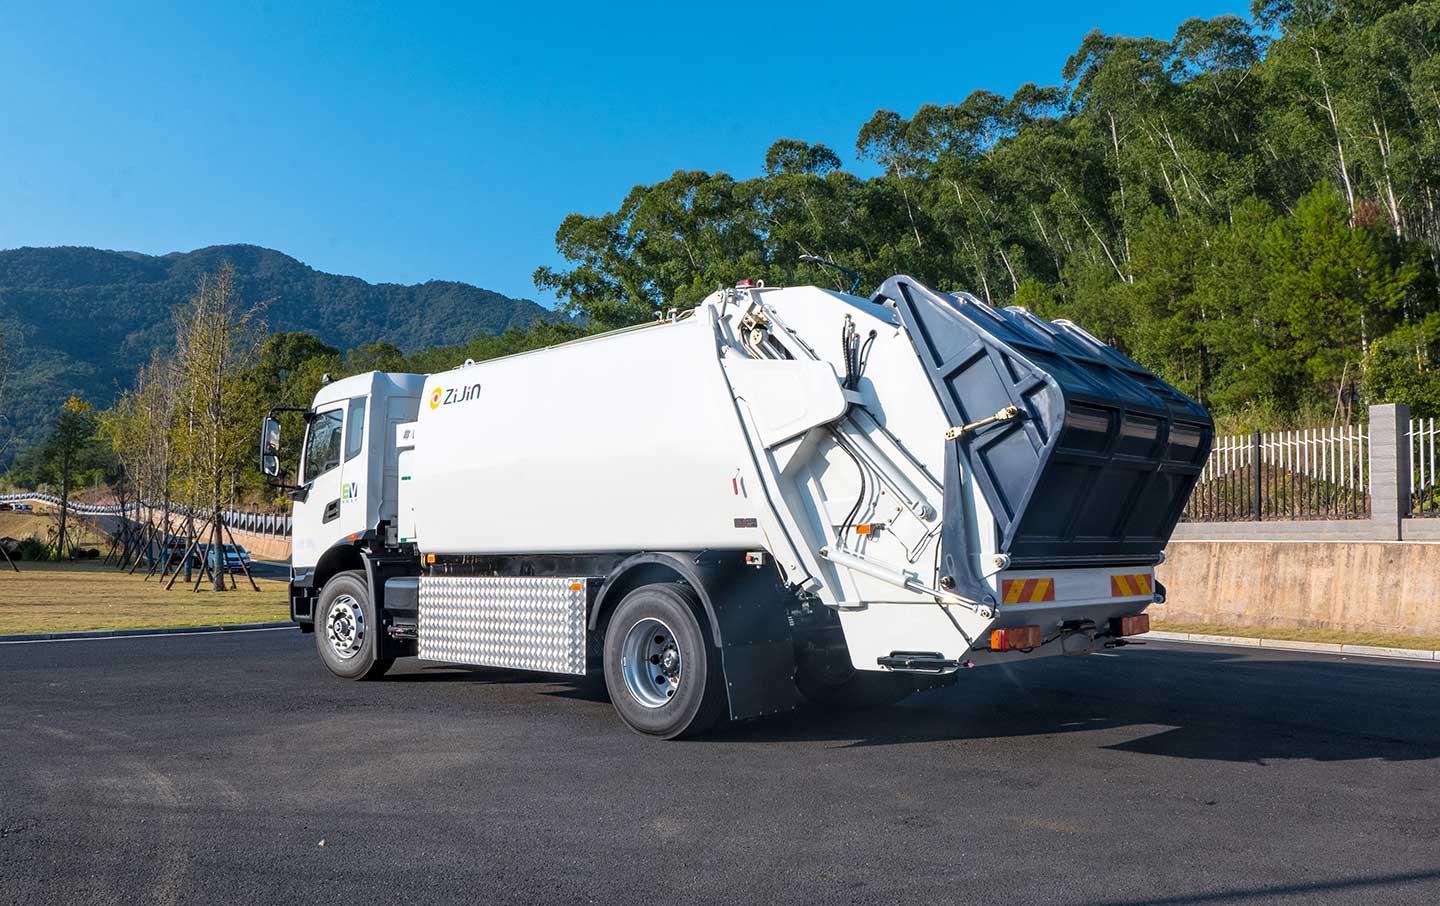 The Essential Role of Rubbish Bin Trucks in Urban Sanitation